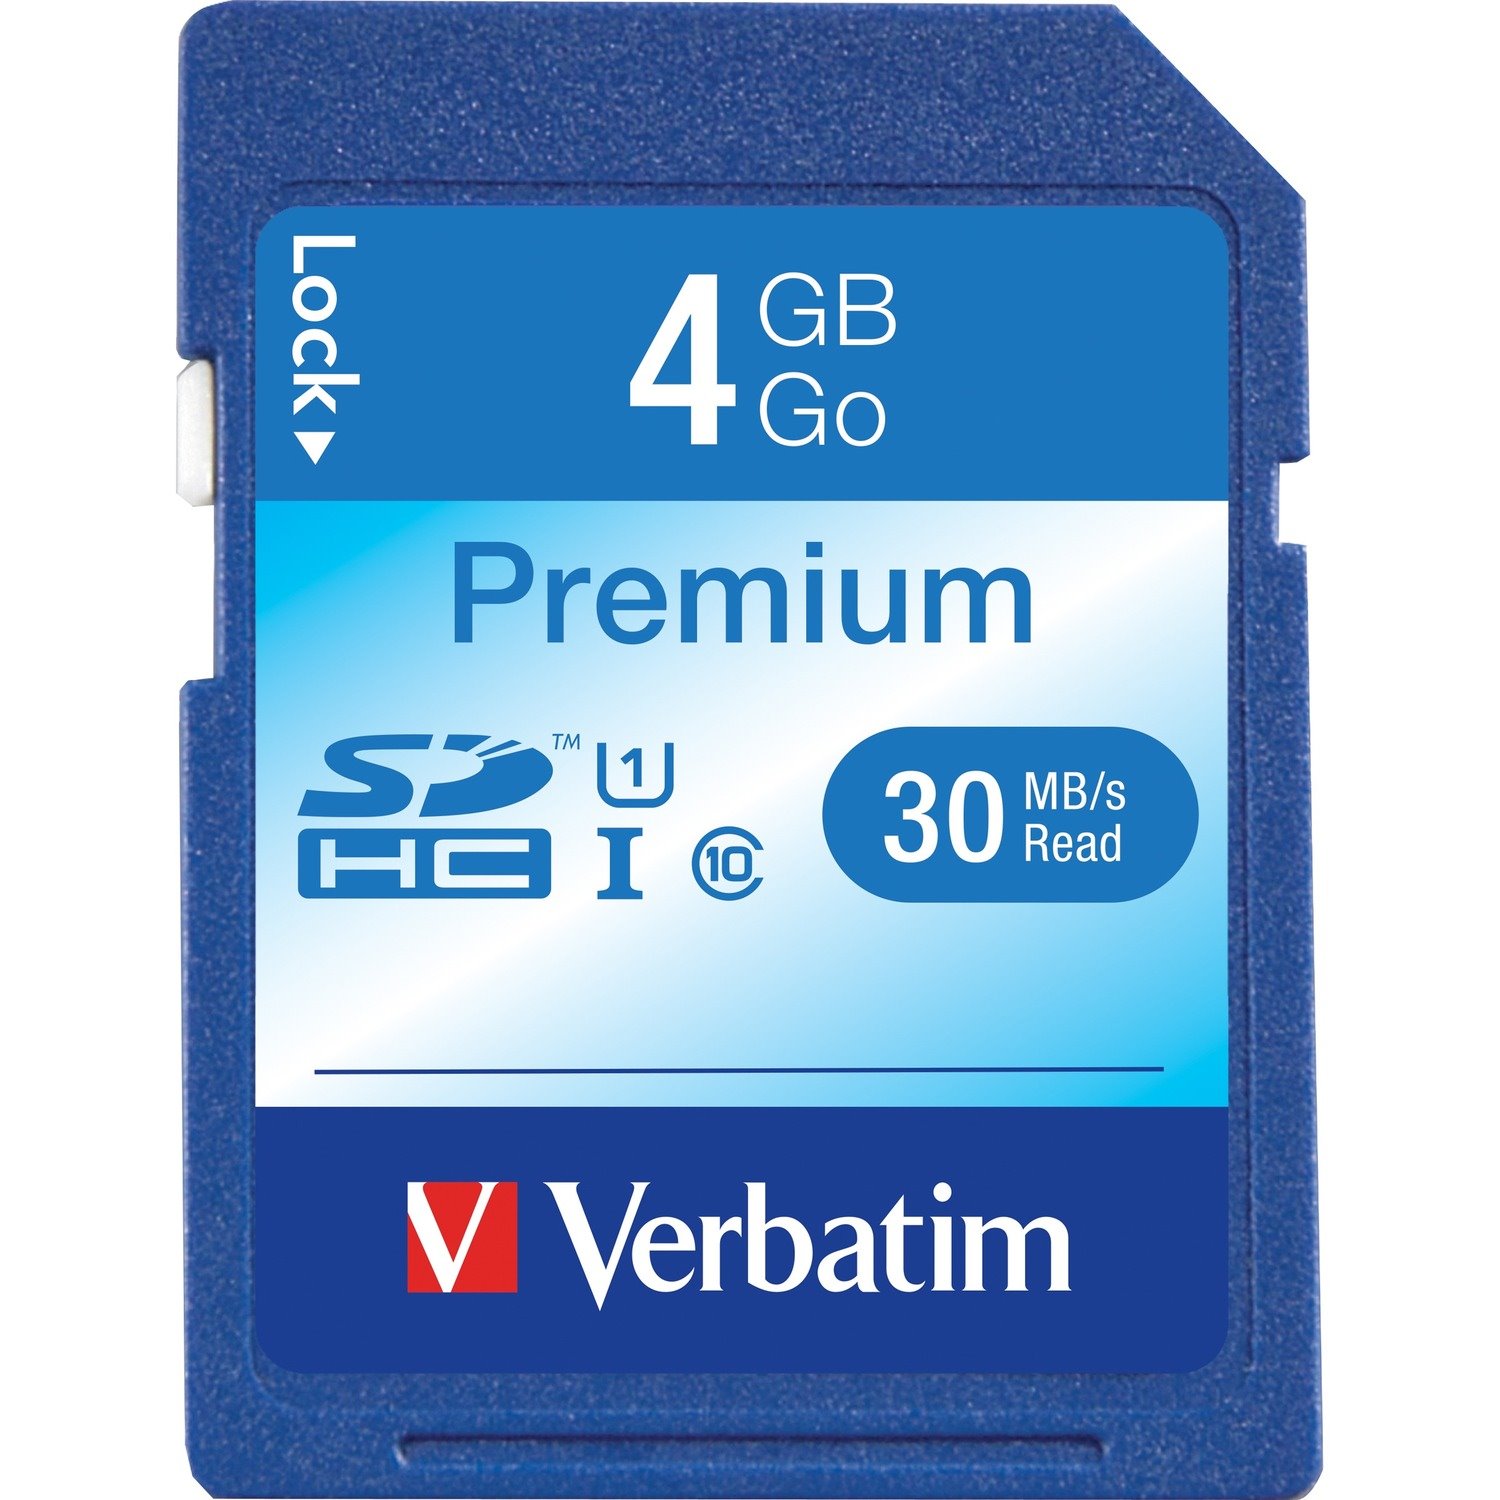 4GB Premium SDHC Memory Card, UHS-I U1 Class 10